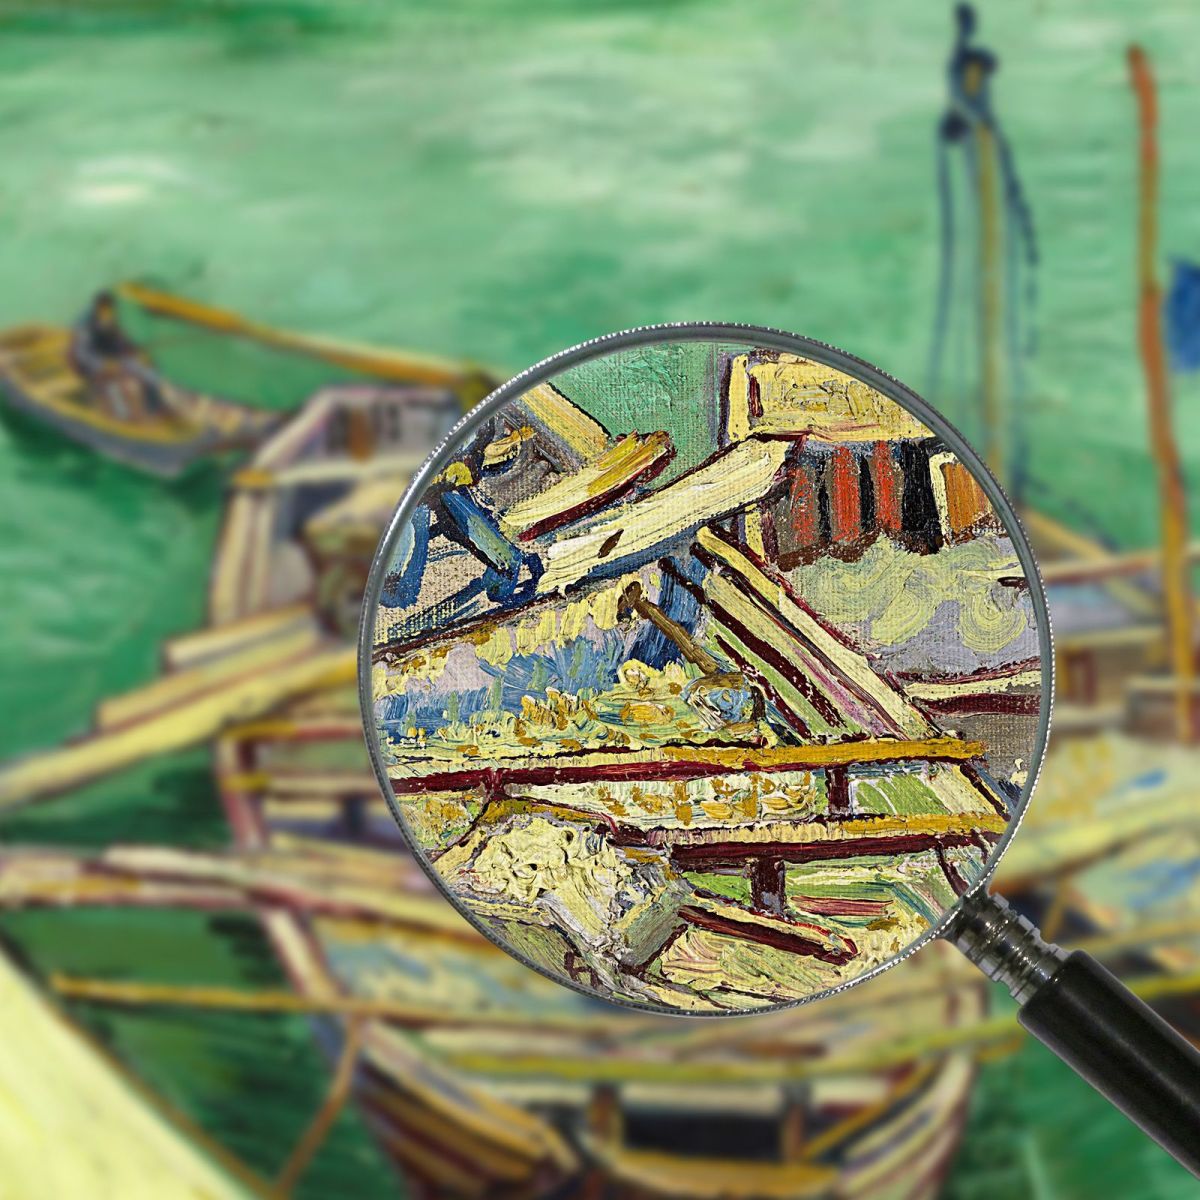 Quay With Men Unloading Sand Barges Van Gogh Vincent canvas print vvg109